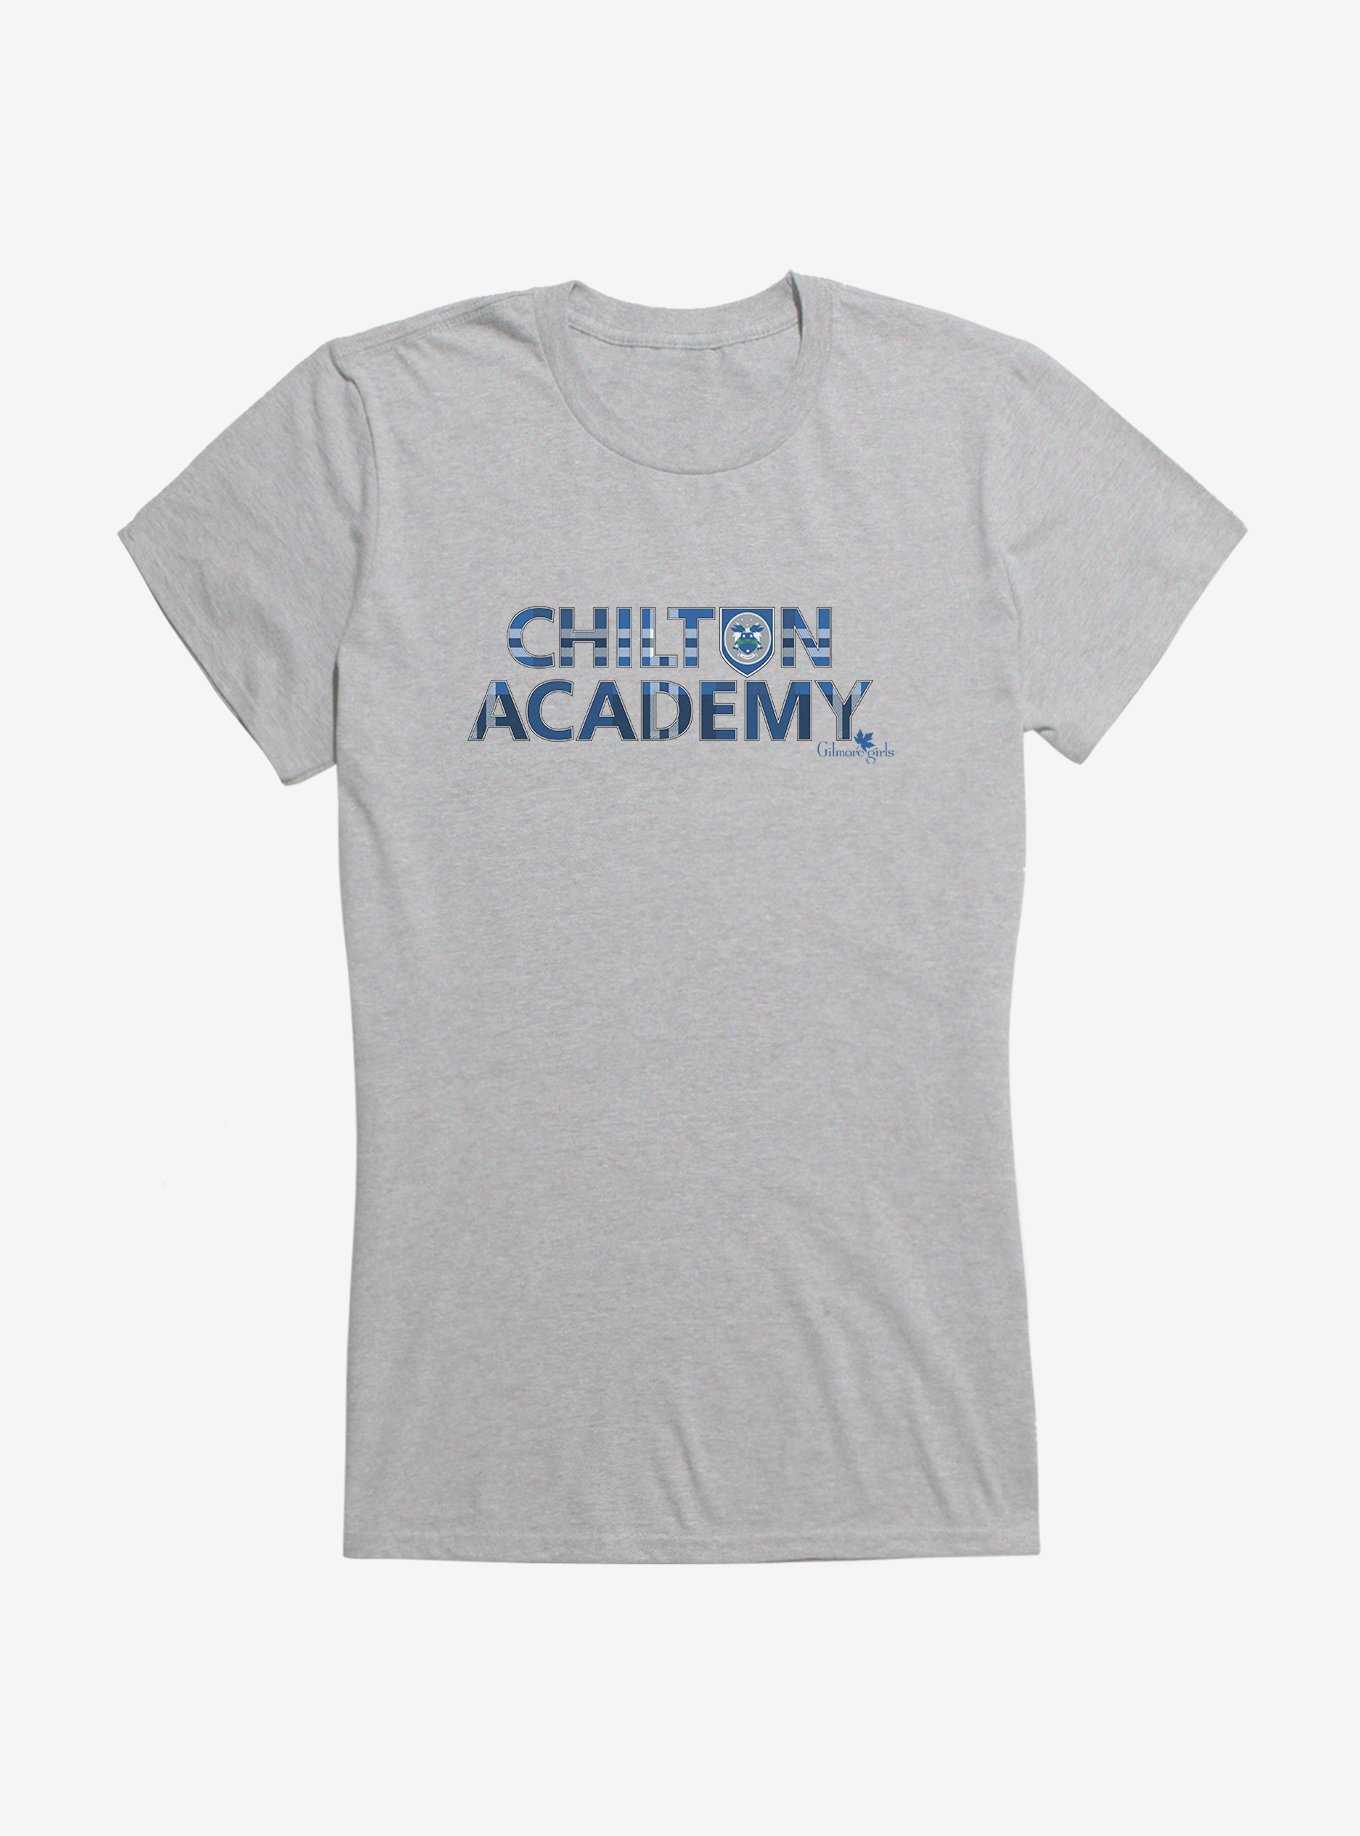 Gilmore Girls Chilton Academy Girls T-Shirt, , hi-res